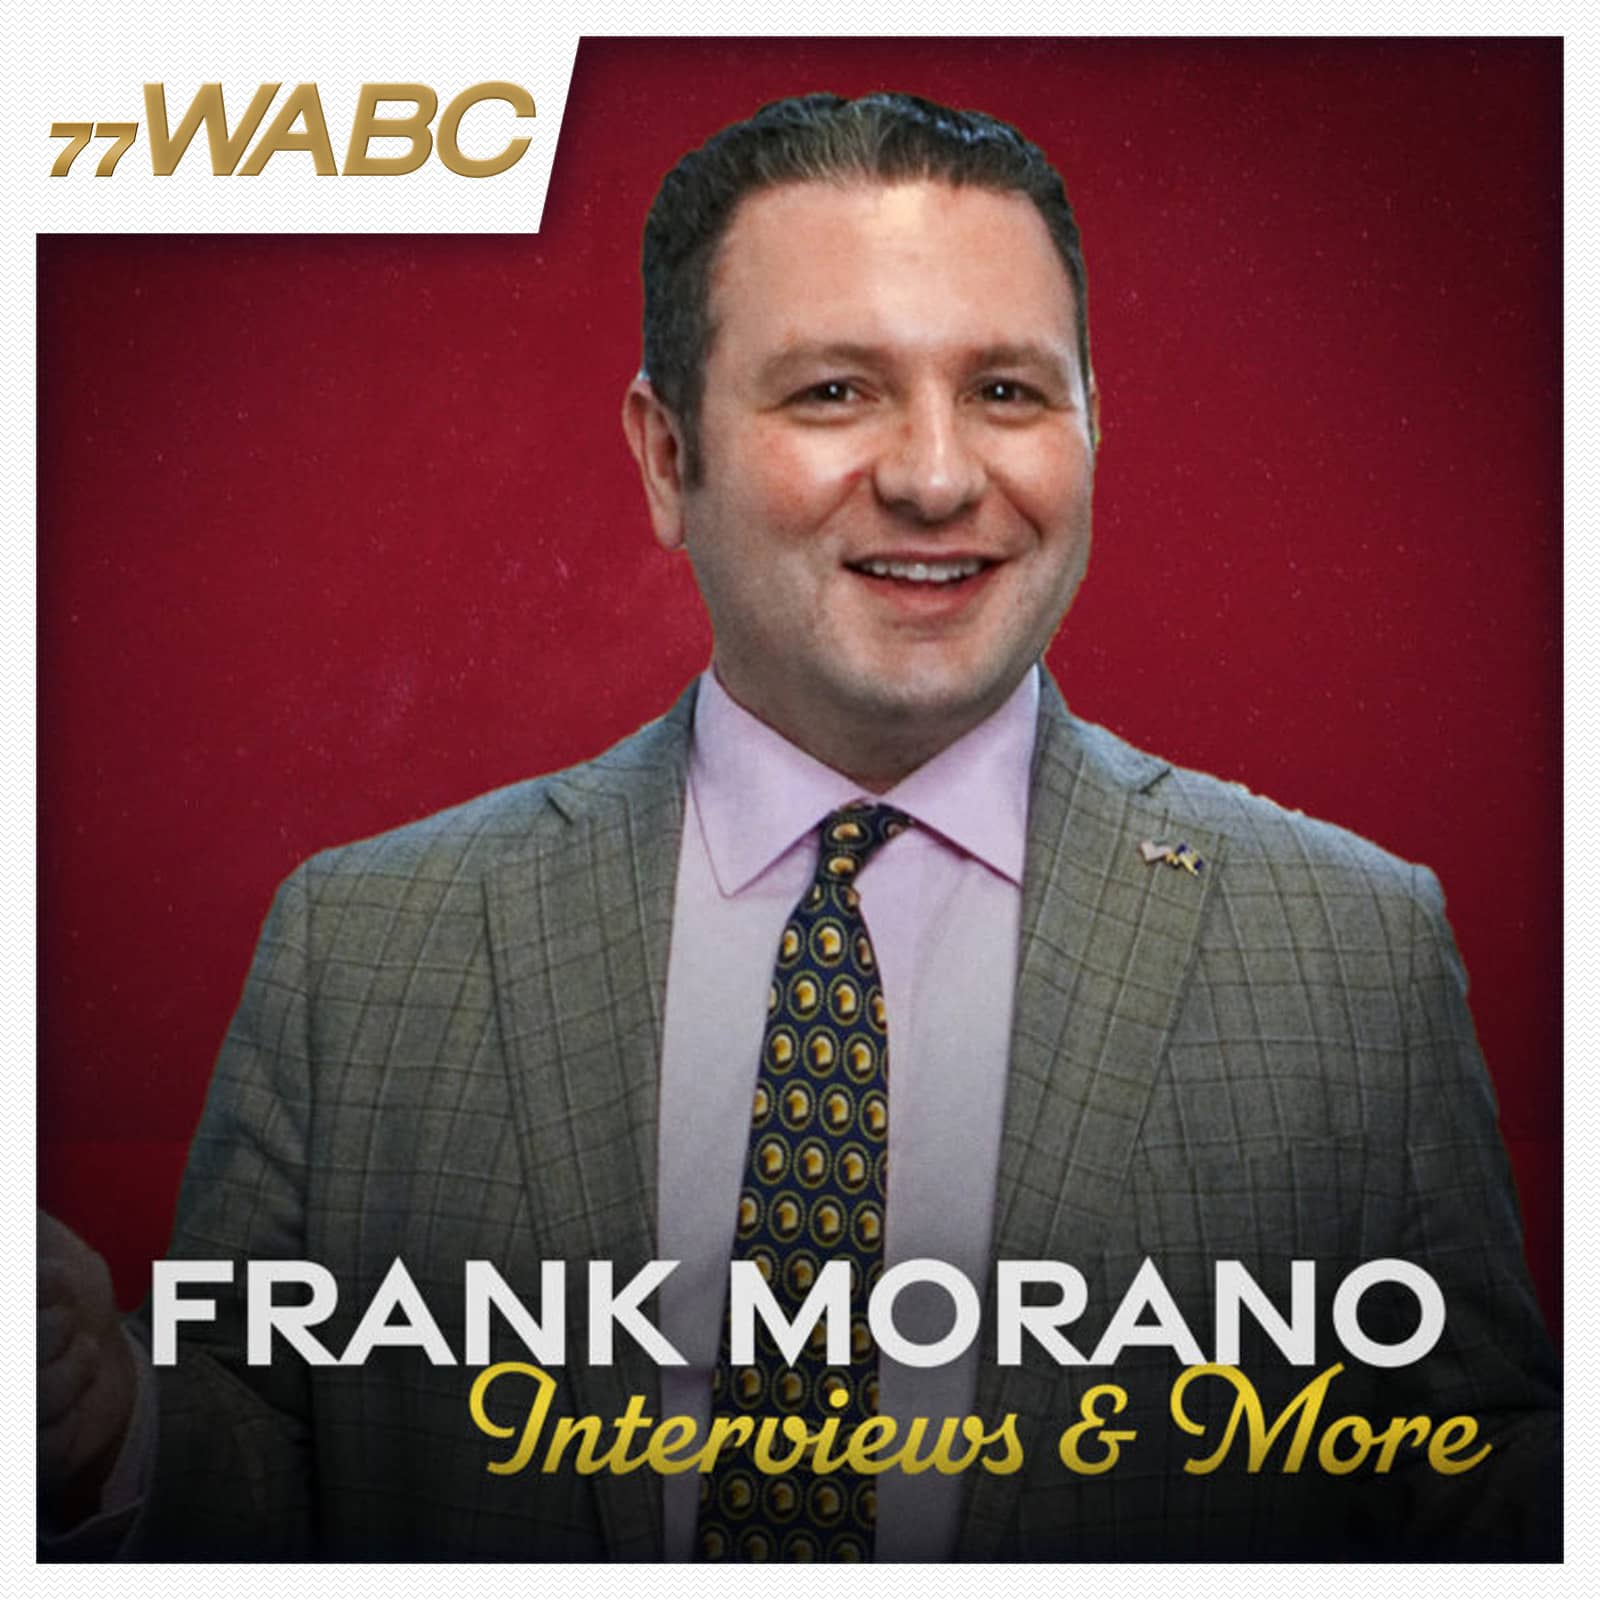 frank-morano-interviews-and-more-podcast-new-logo-88